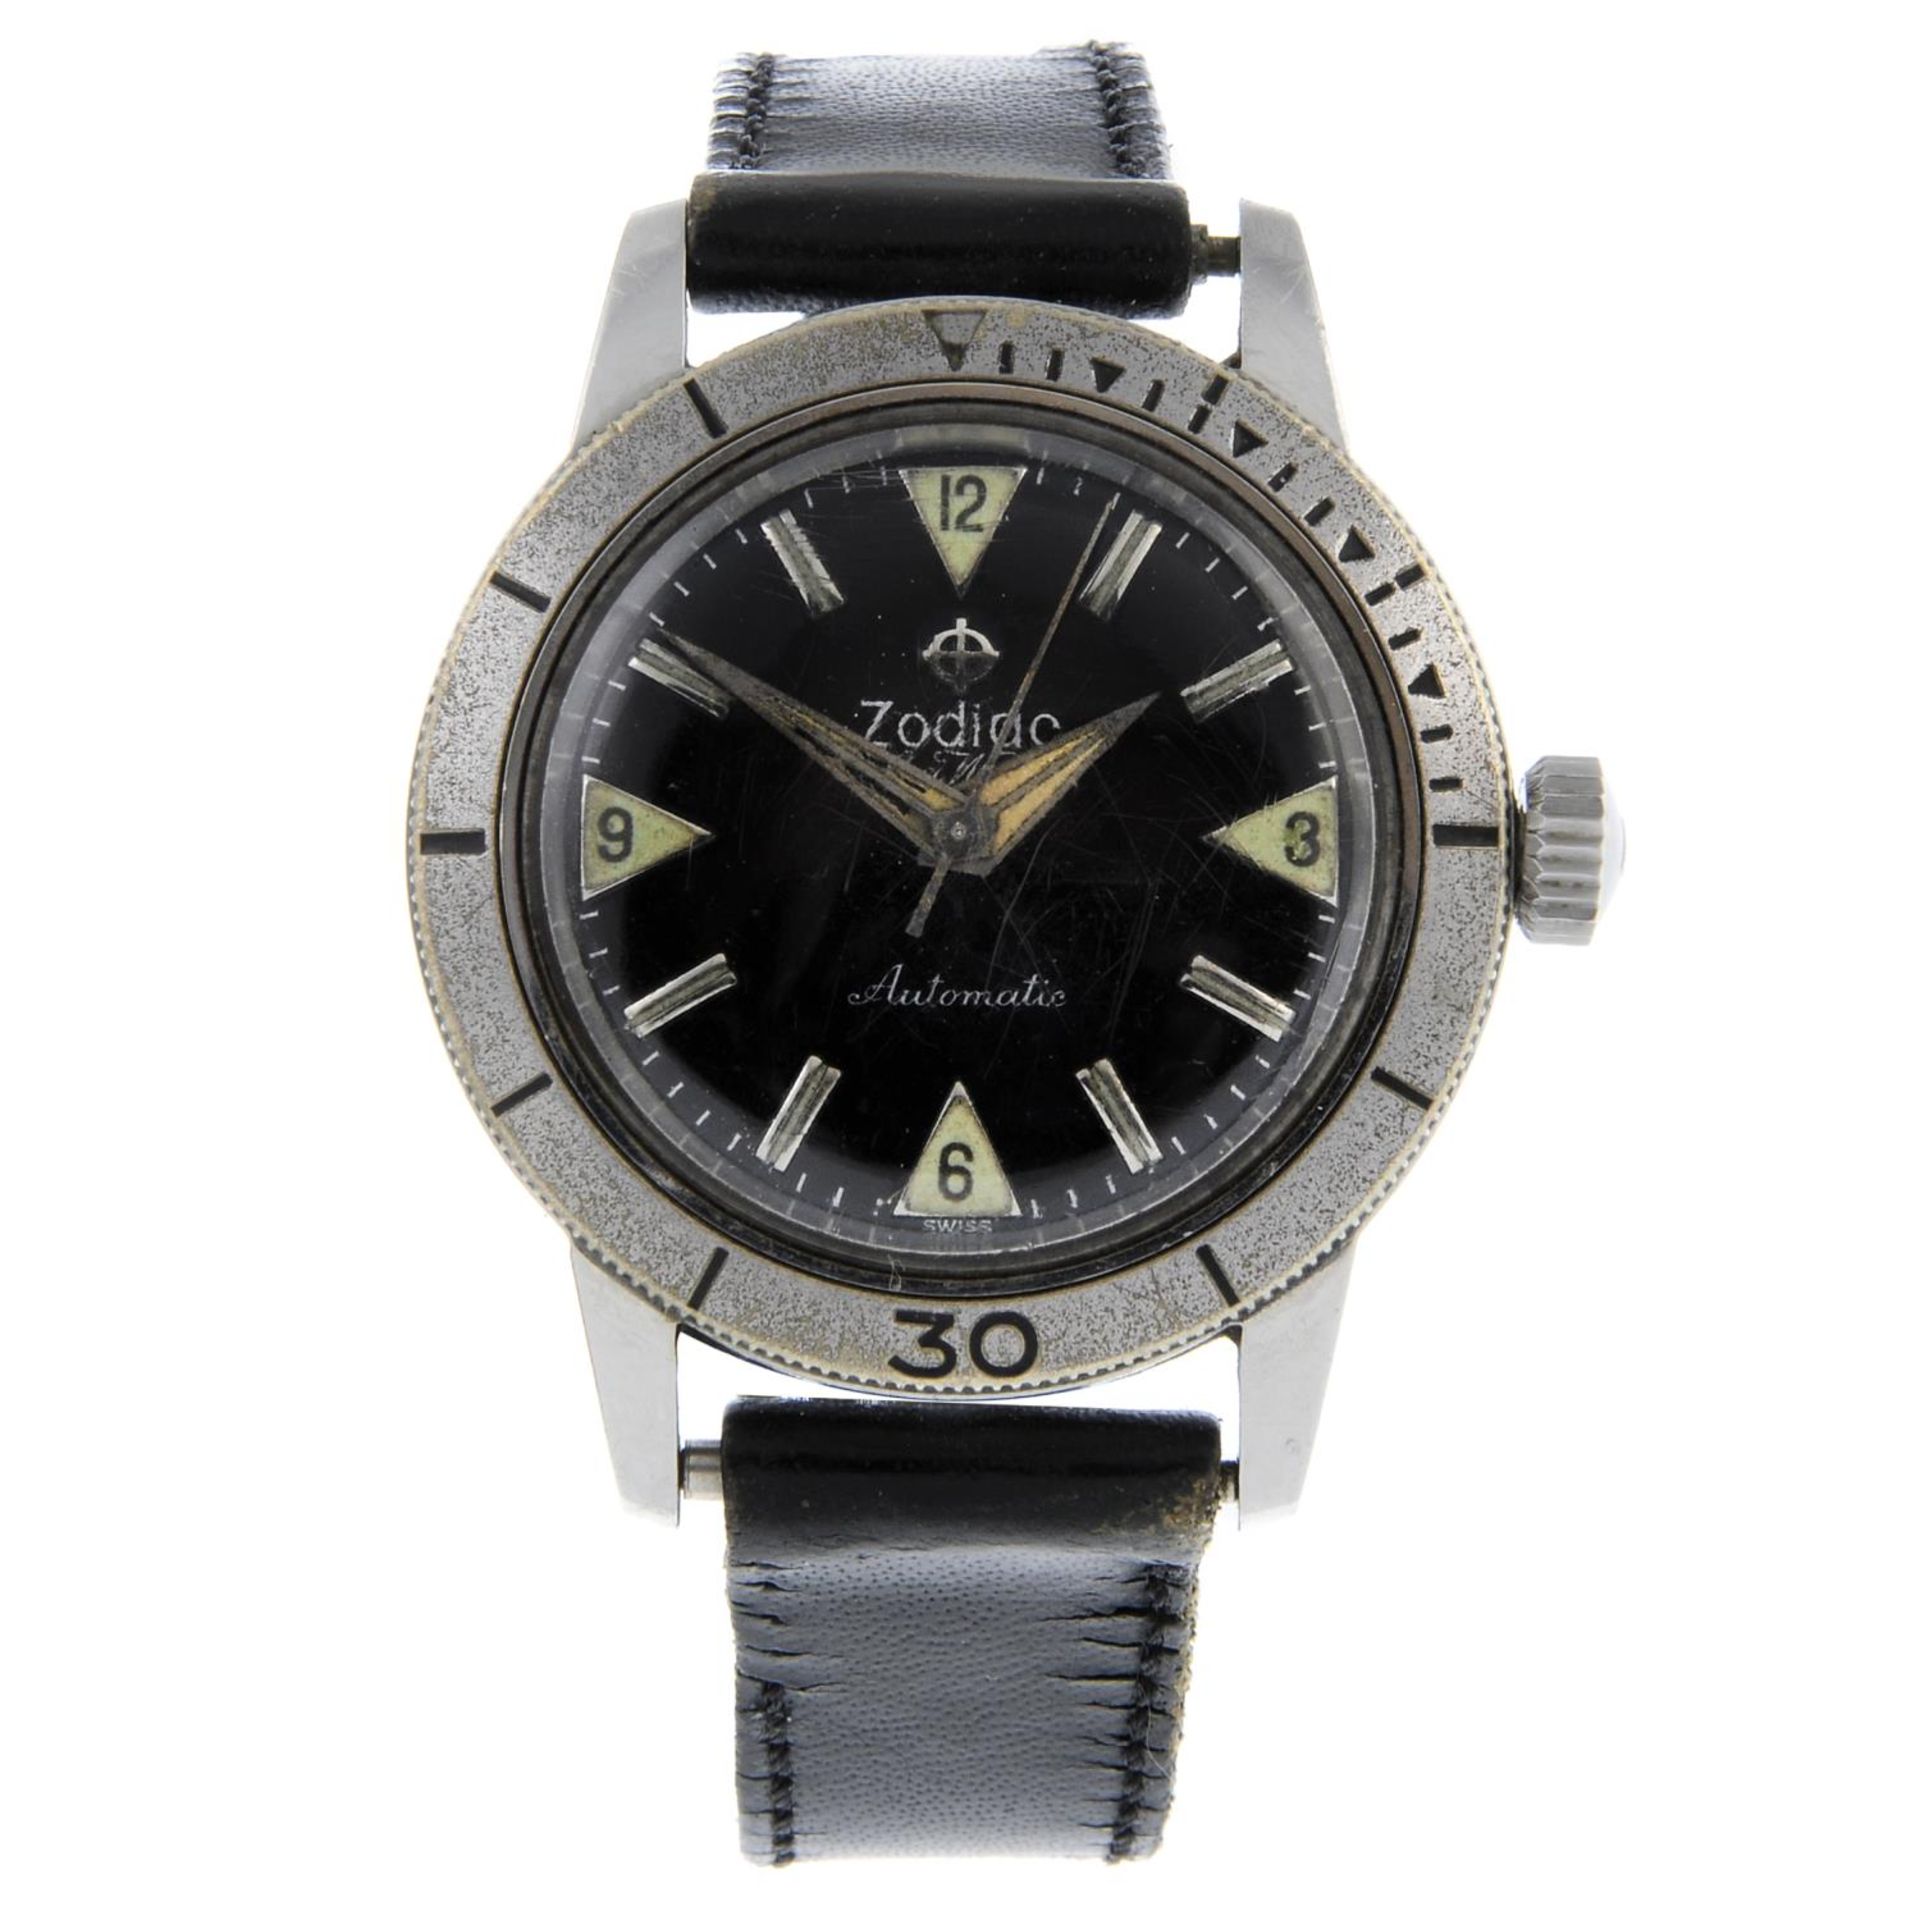 ZODIAC - a gentleman's Sea Wolf wrist watch.